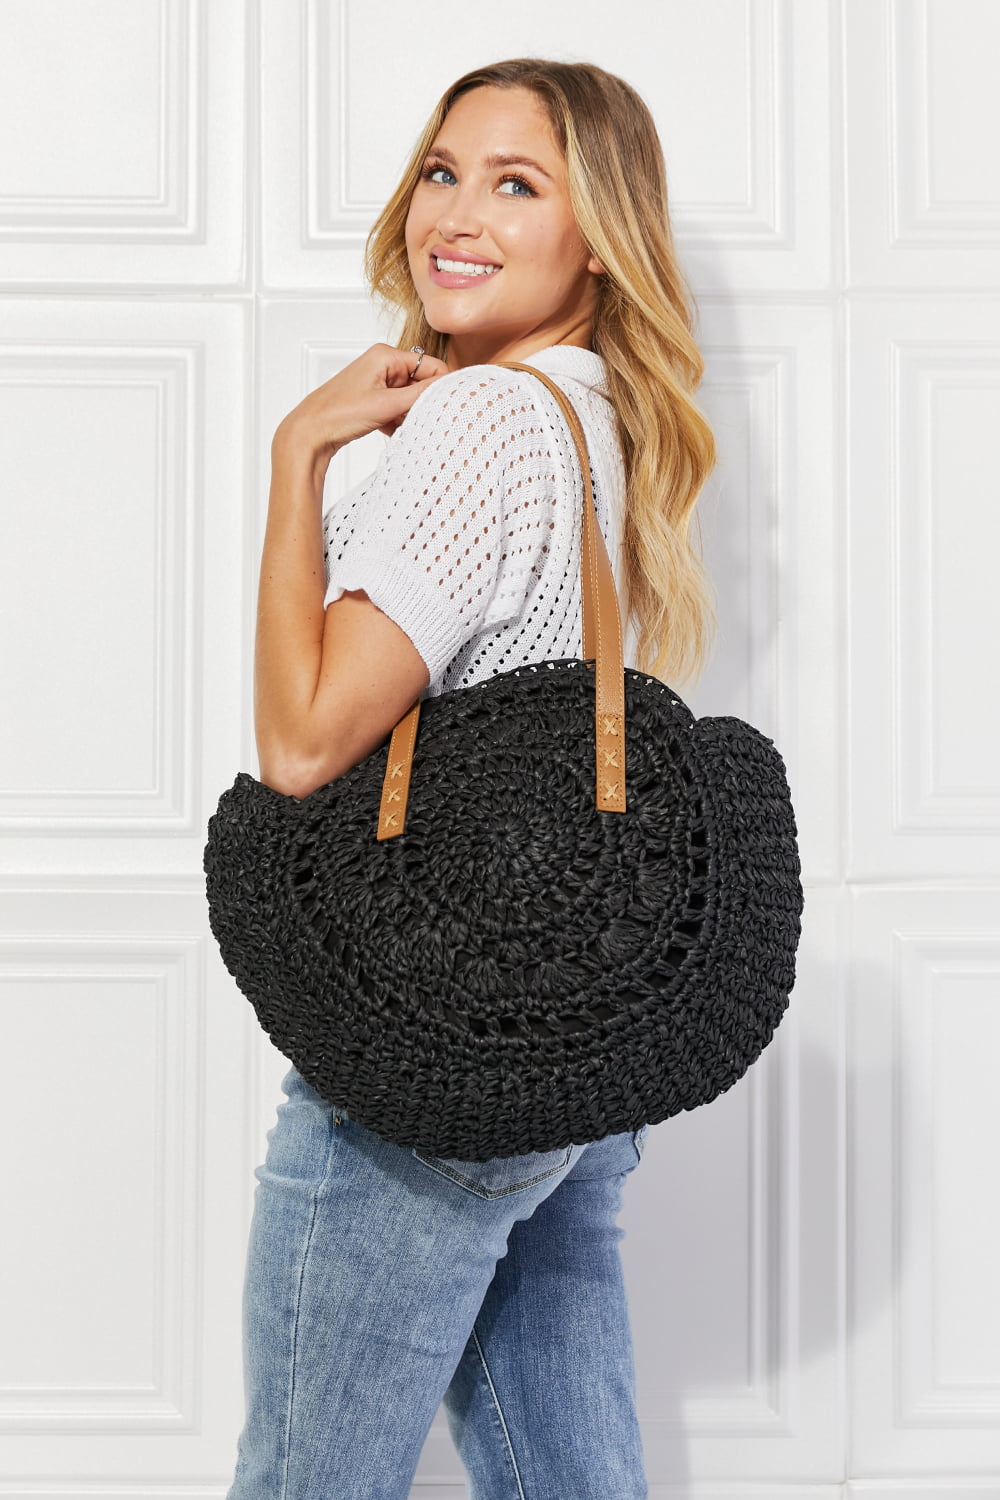 Justin Taylor C'est La Vie Crochet Handbag in Black  Sunset and Swim Black One Size 